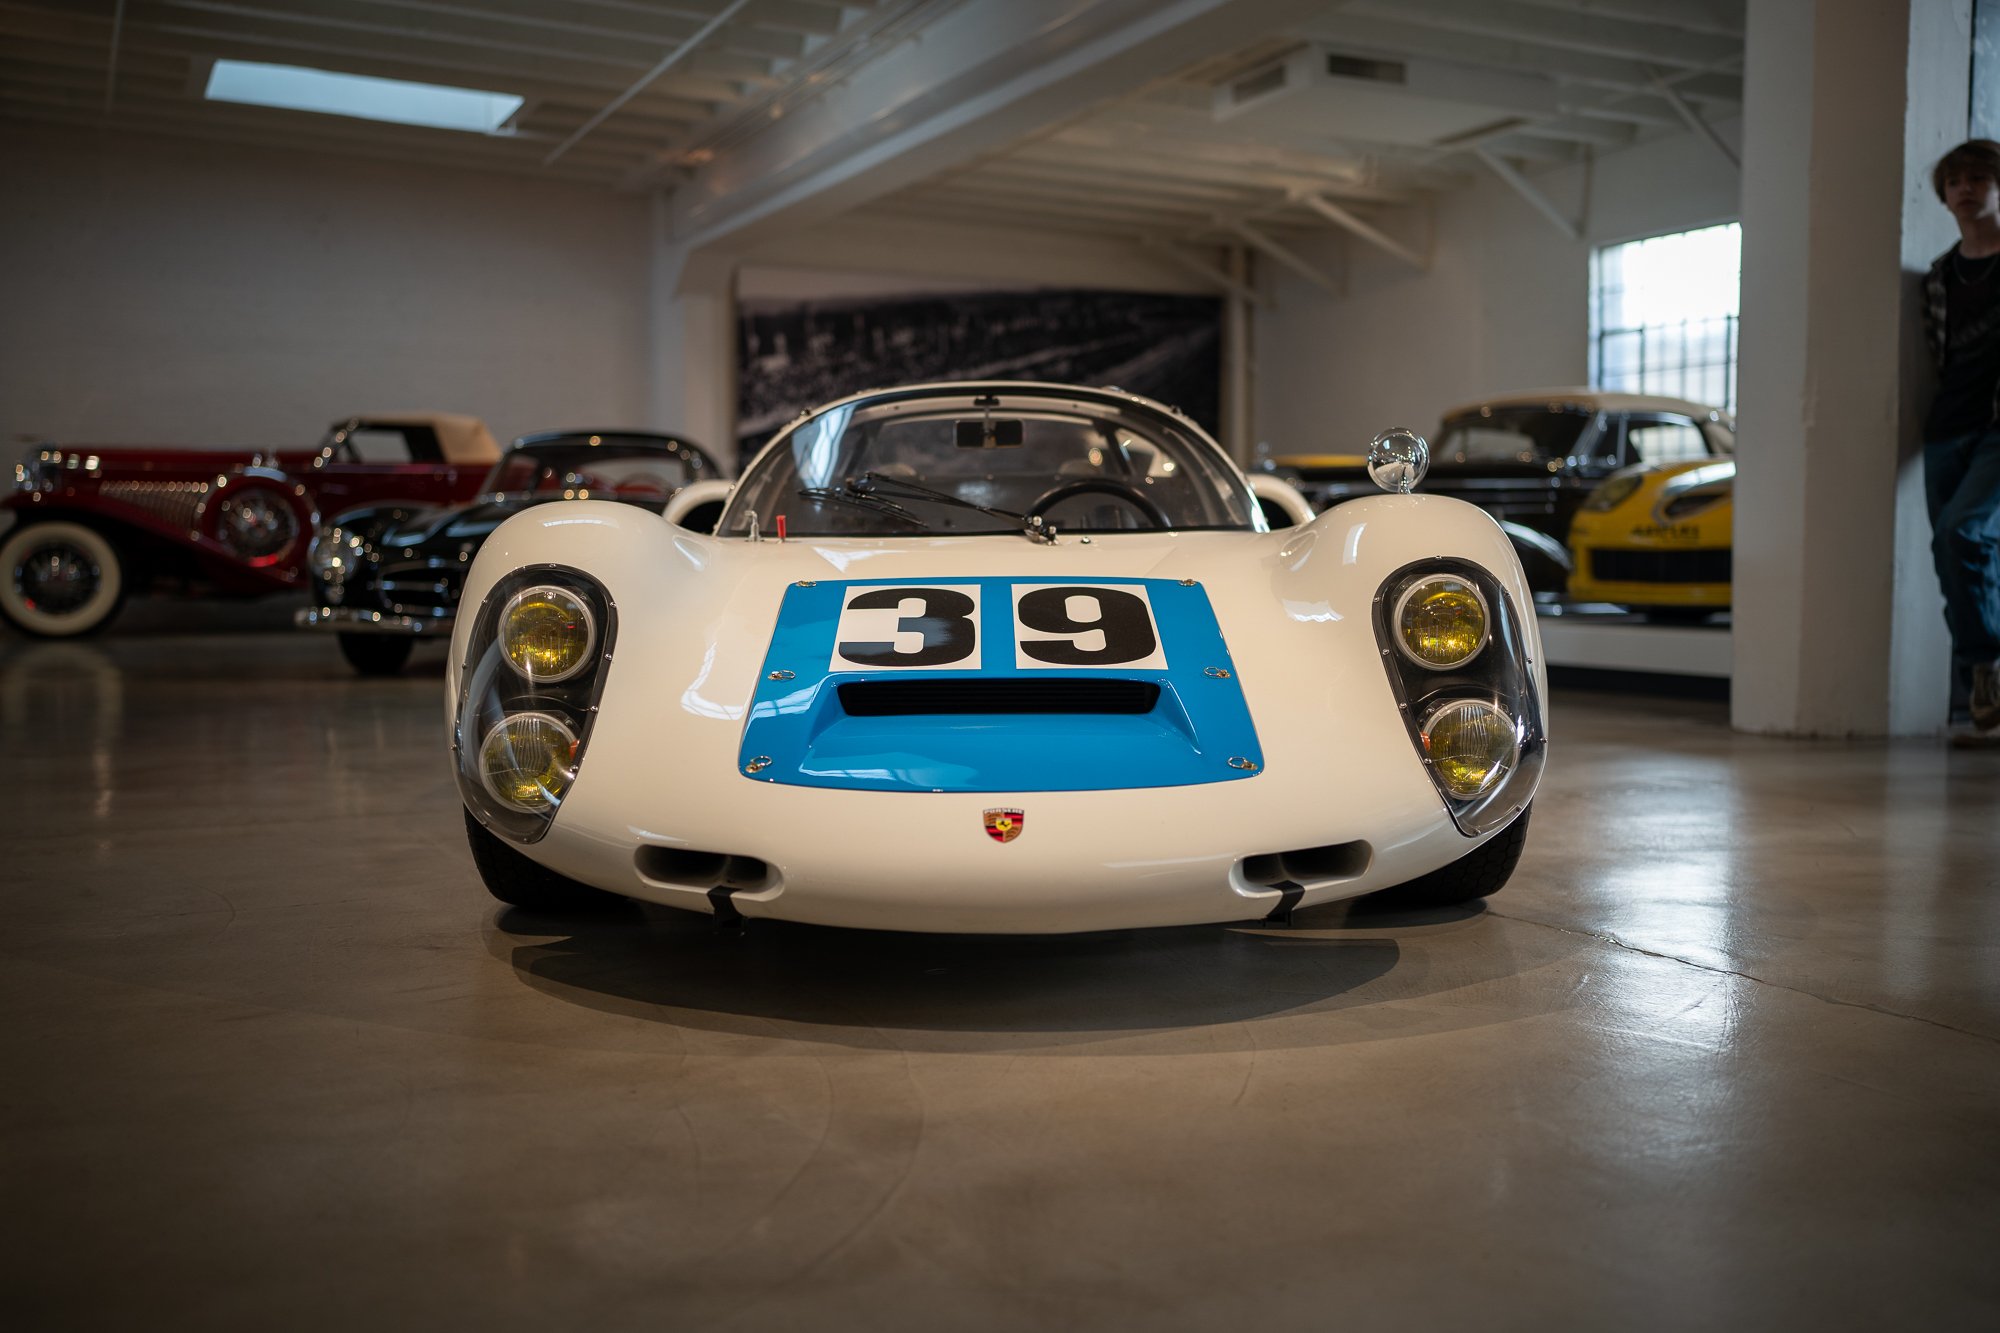 Porsche 910 racecar owned by Bruce Meyer